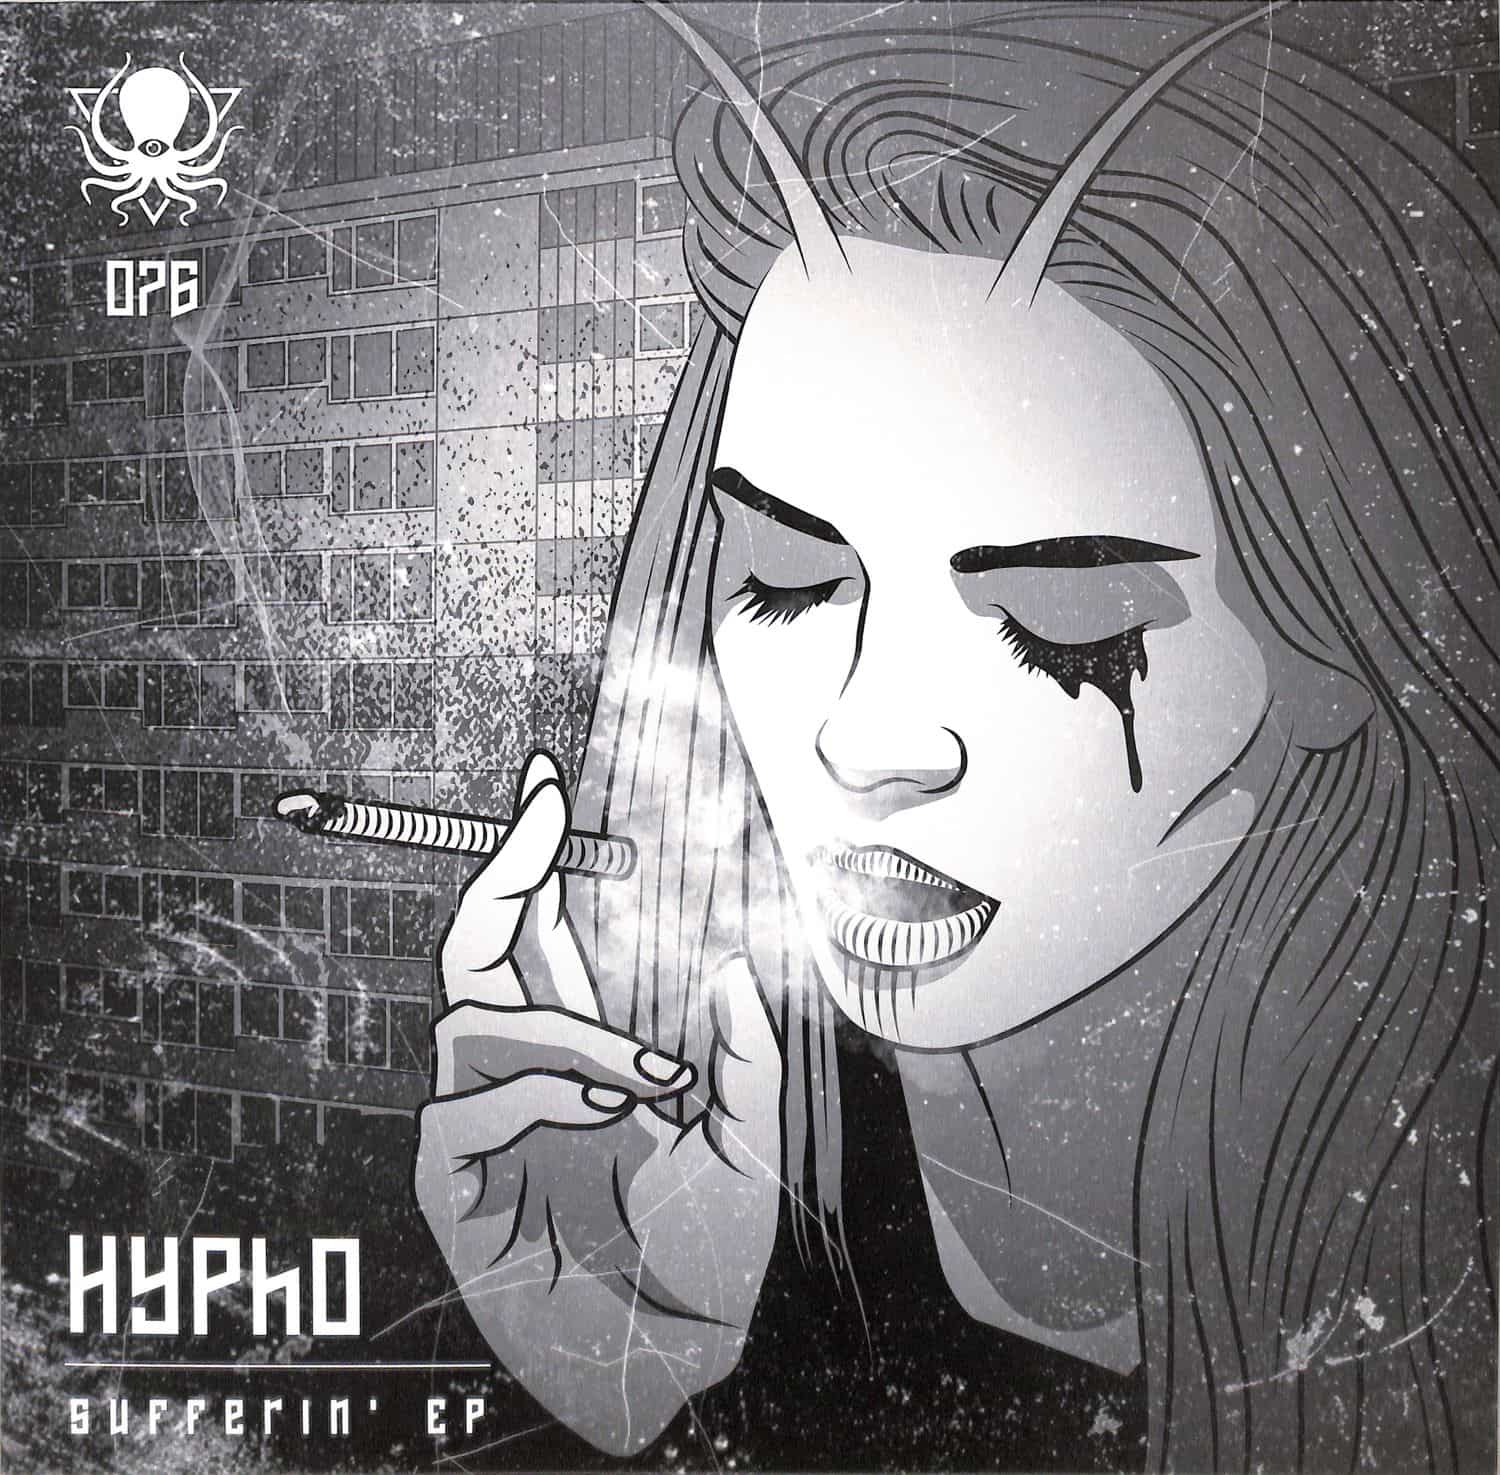 Hypho - SUFFERIN EP